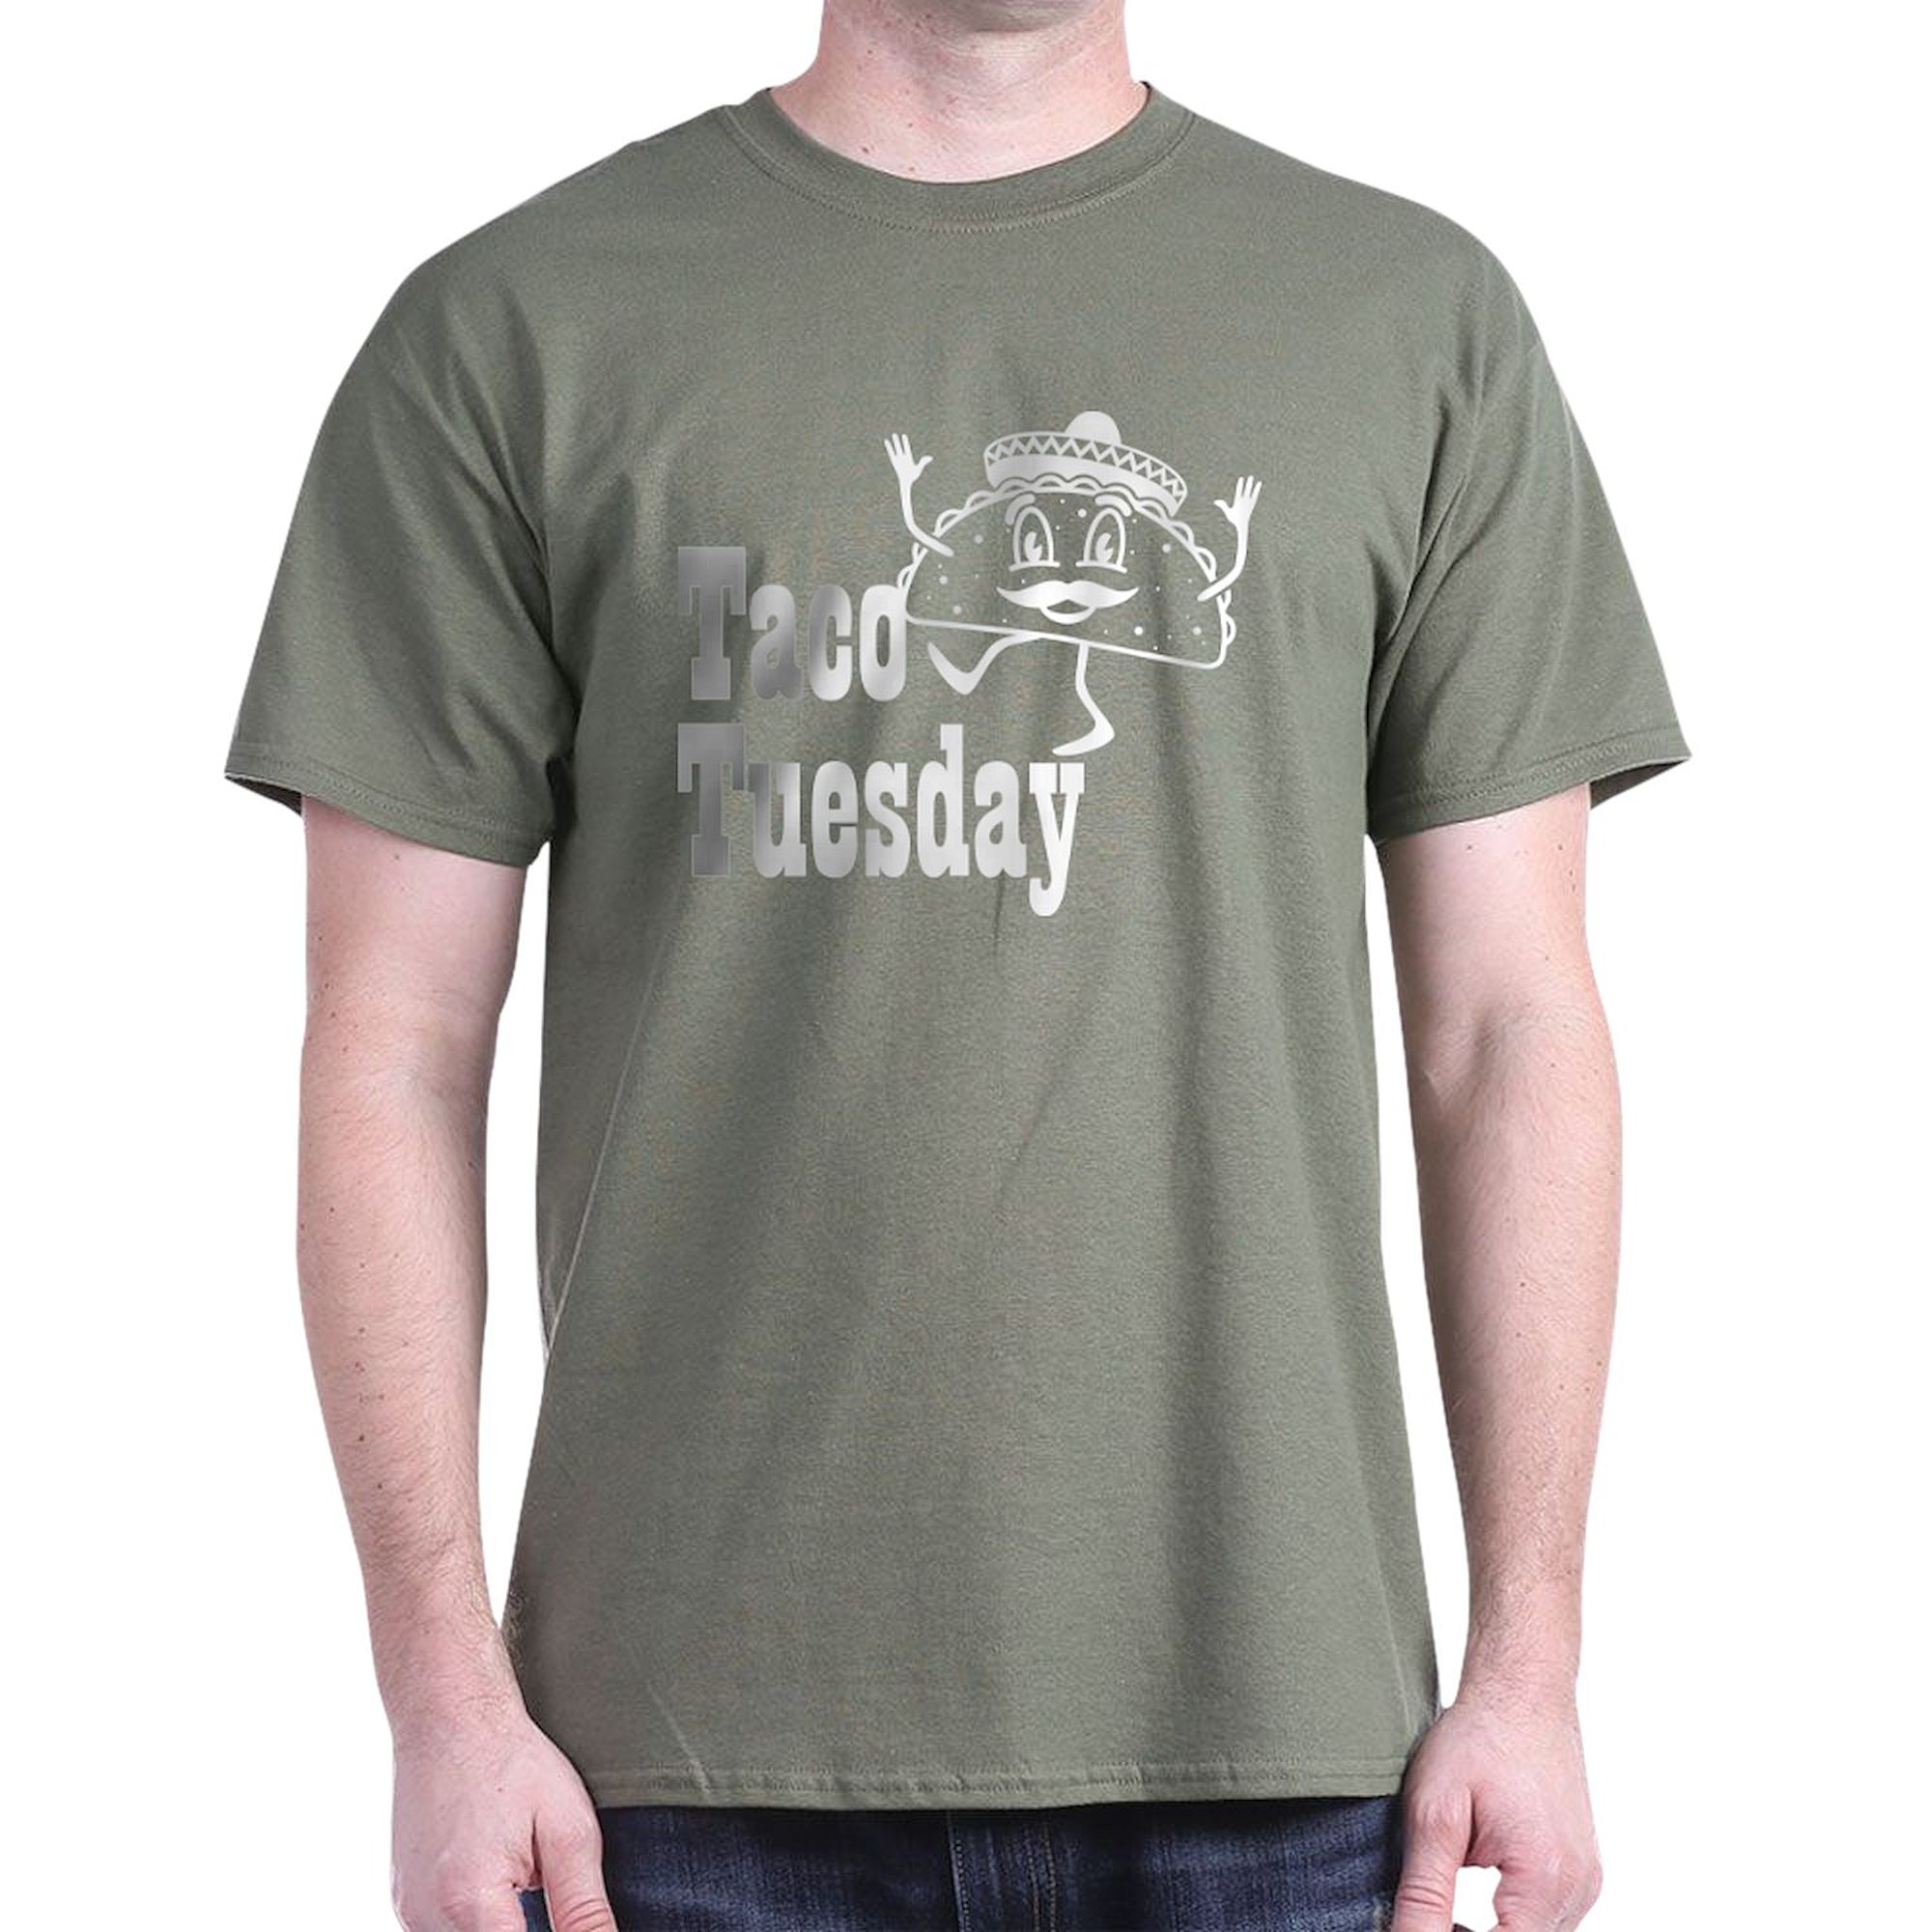 CafePress - Cinco De Mayo Funny Tshirts Gifts Shirts T Shirt - 100% Cotton T-Shirt - image 1 of 4